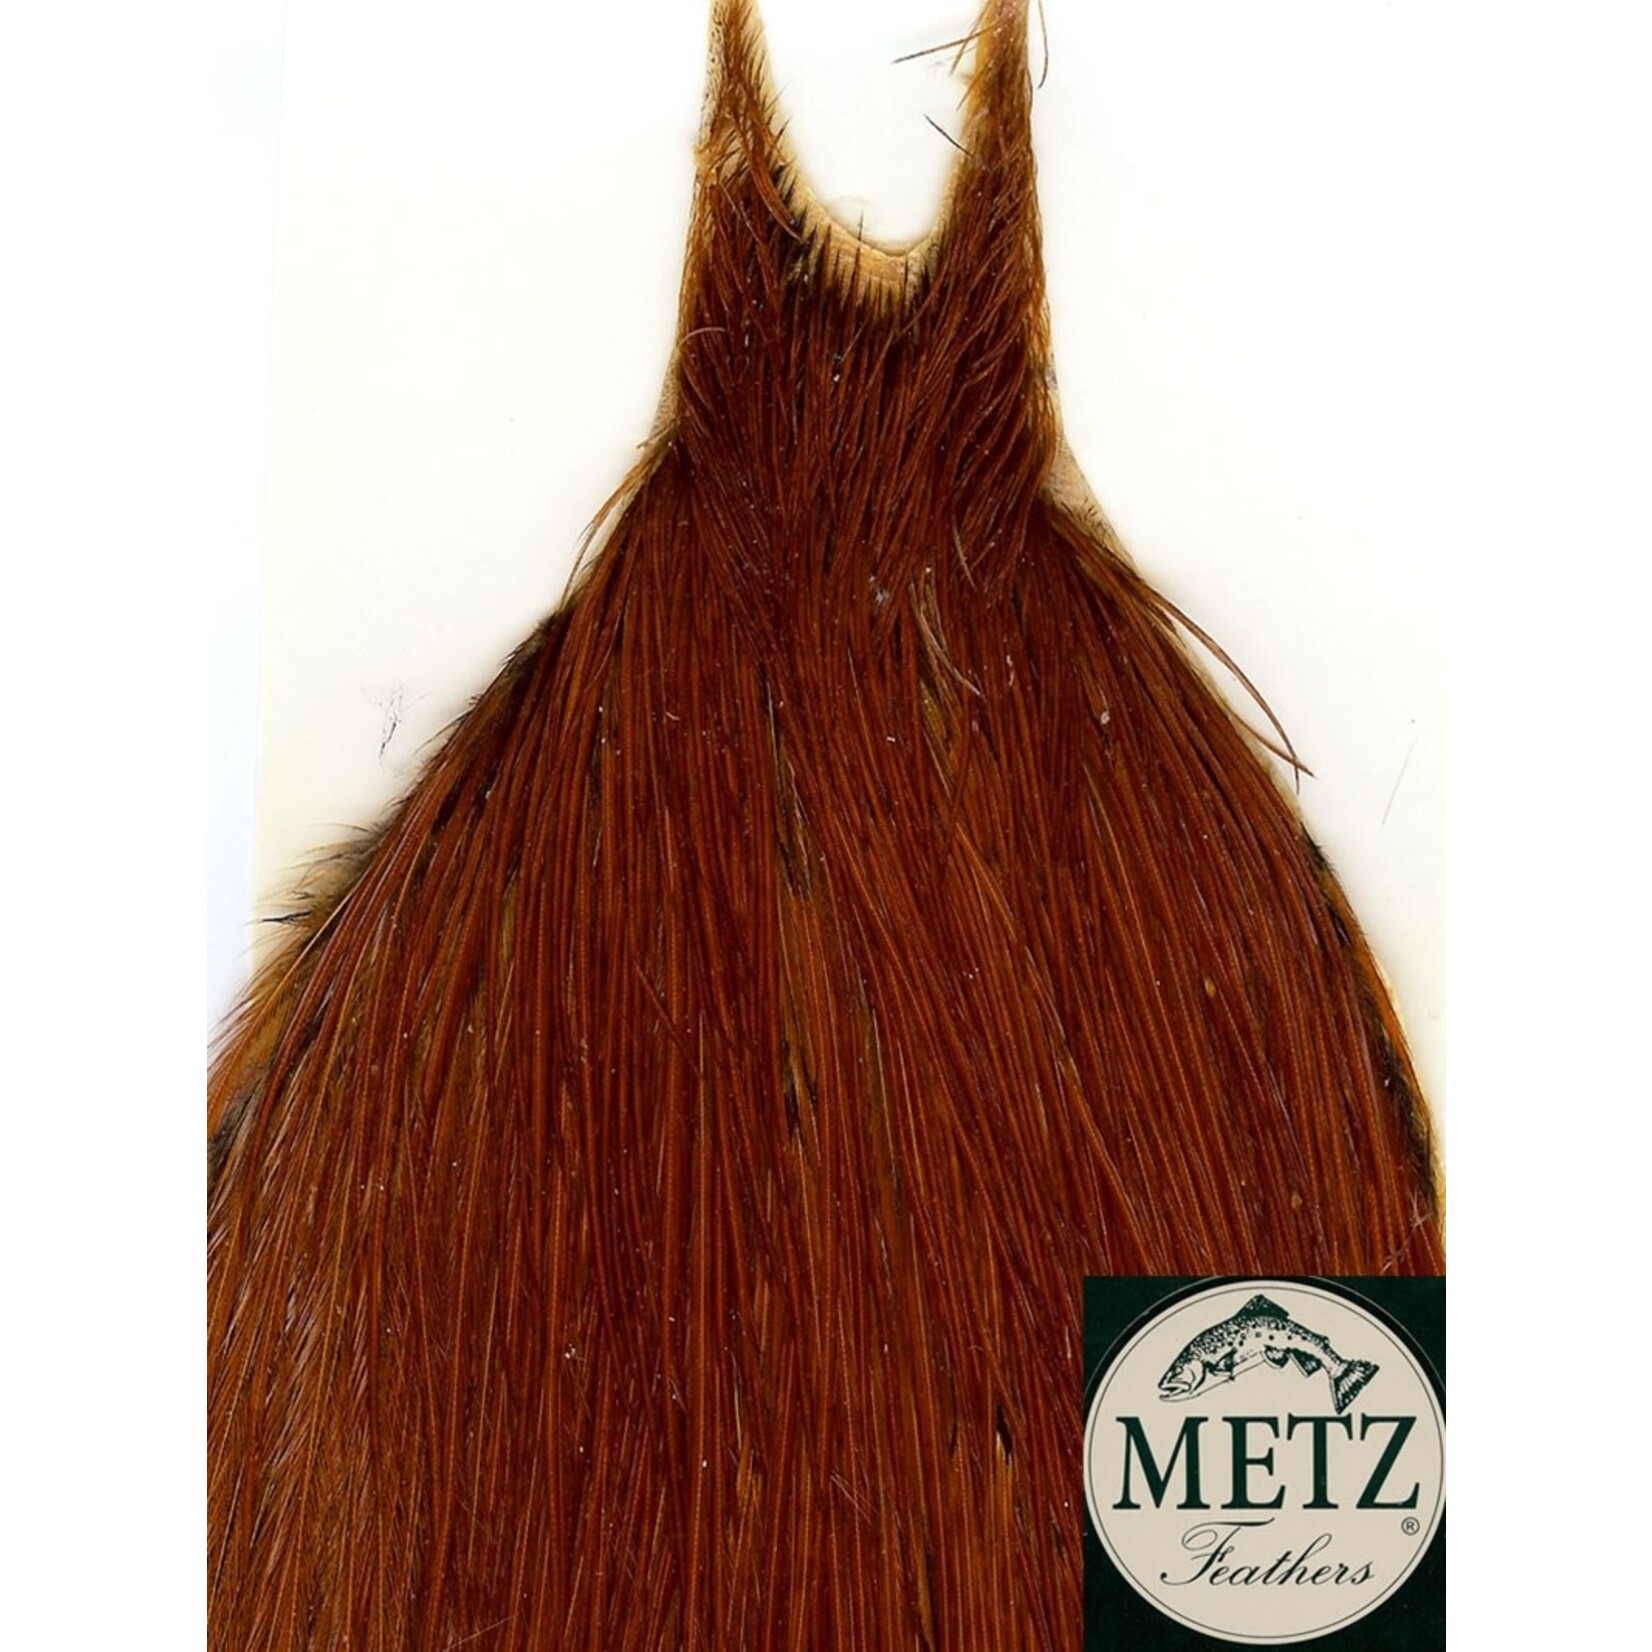 metz feathers METZ #1 NECK BROWN NATURAL